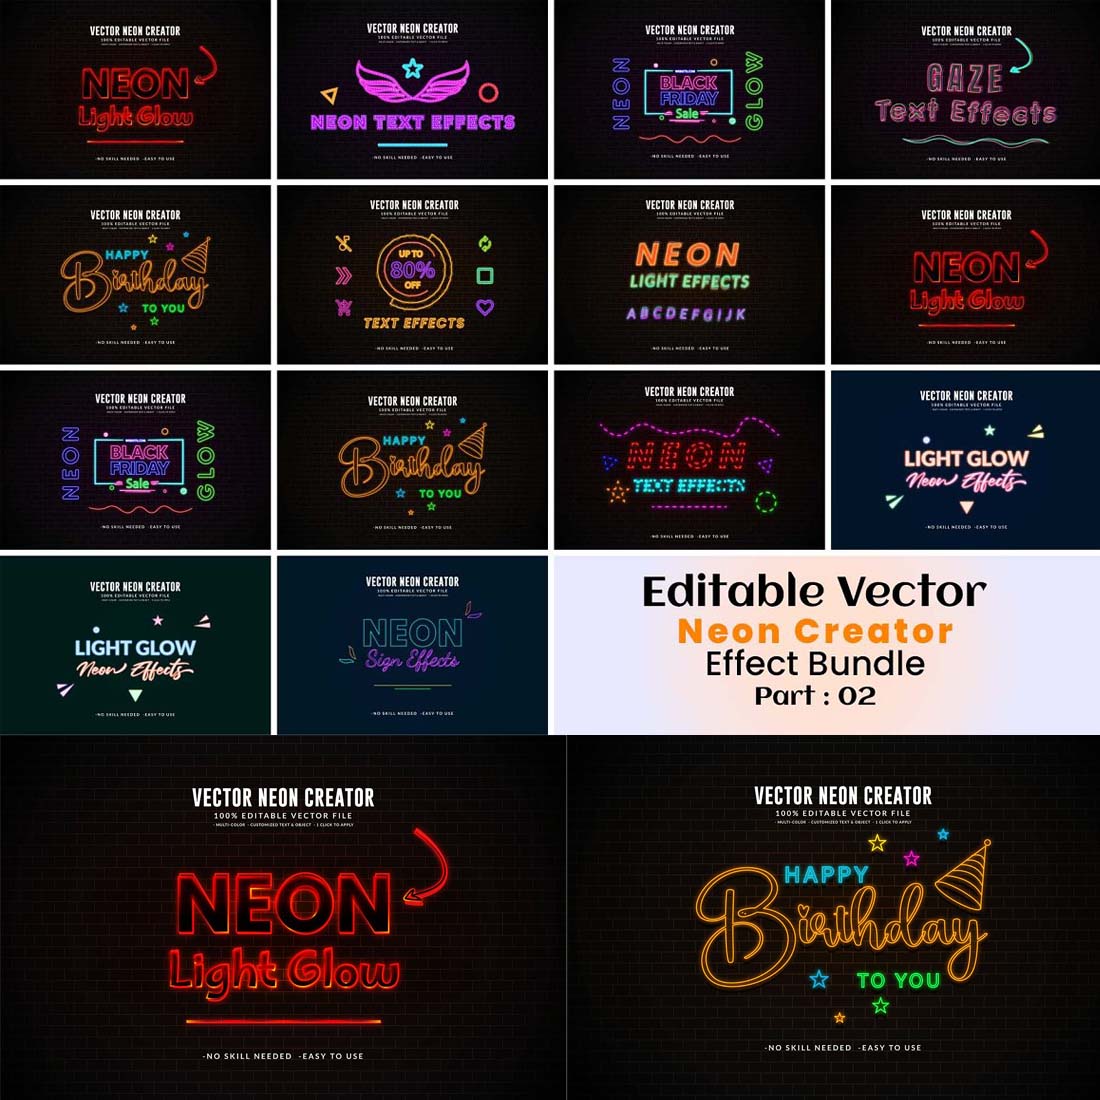 Vector Neon Creator Editable Effect cover image.